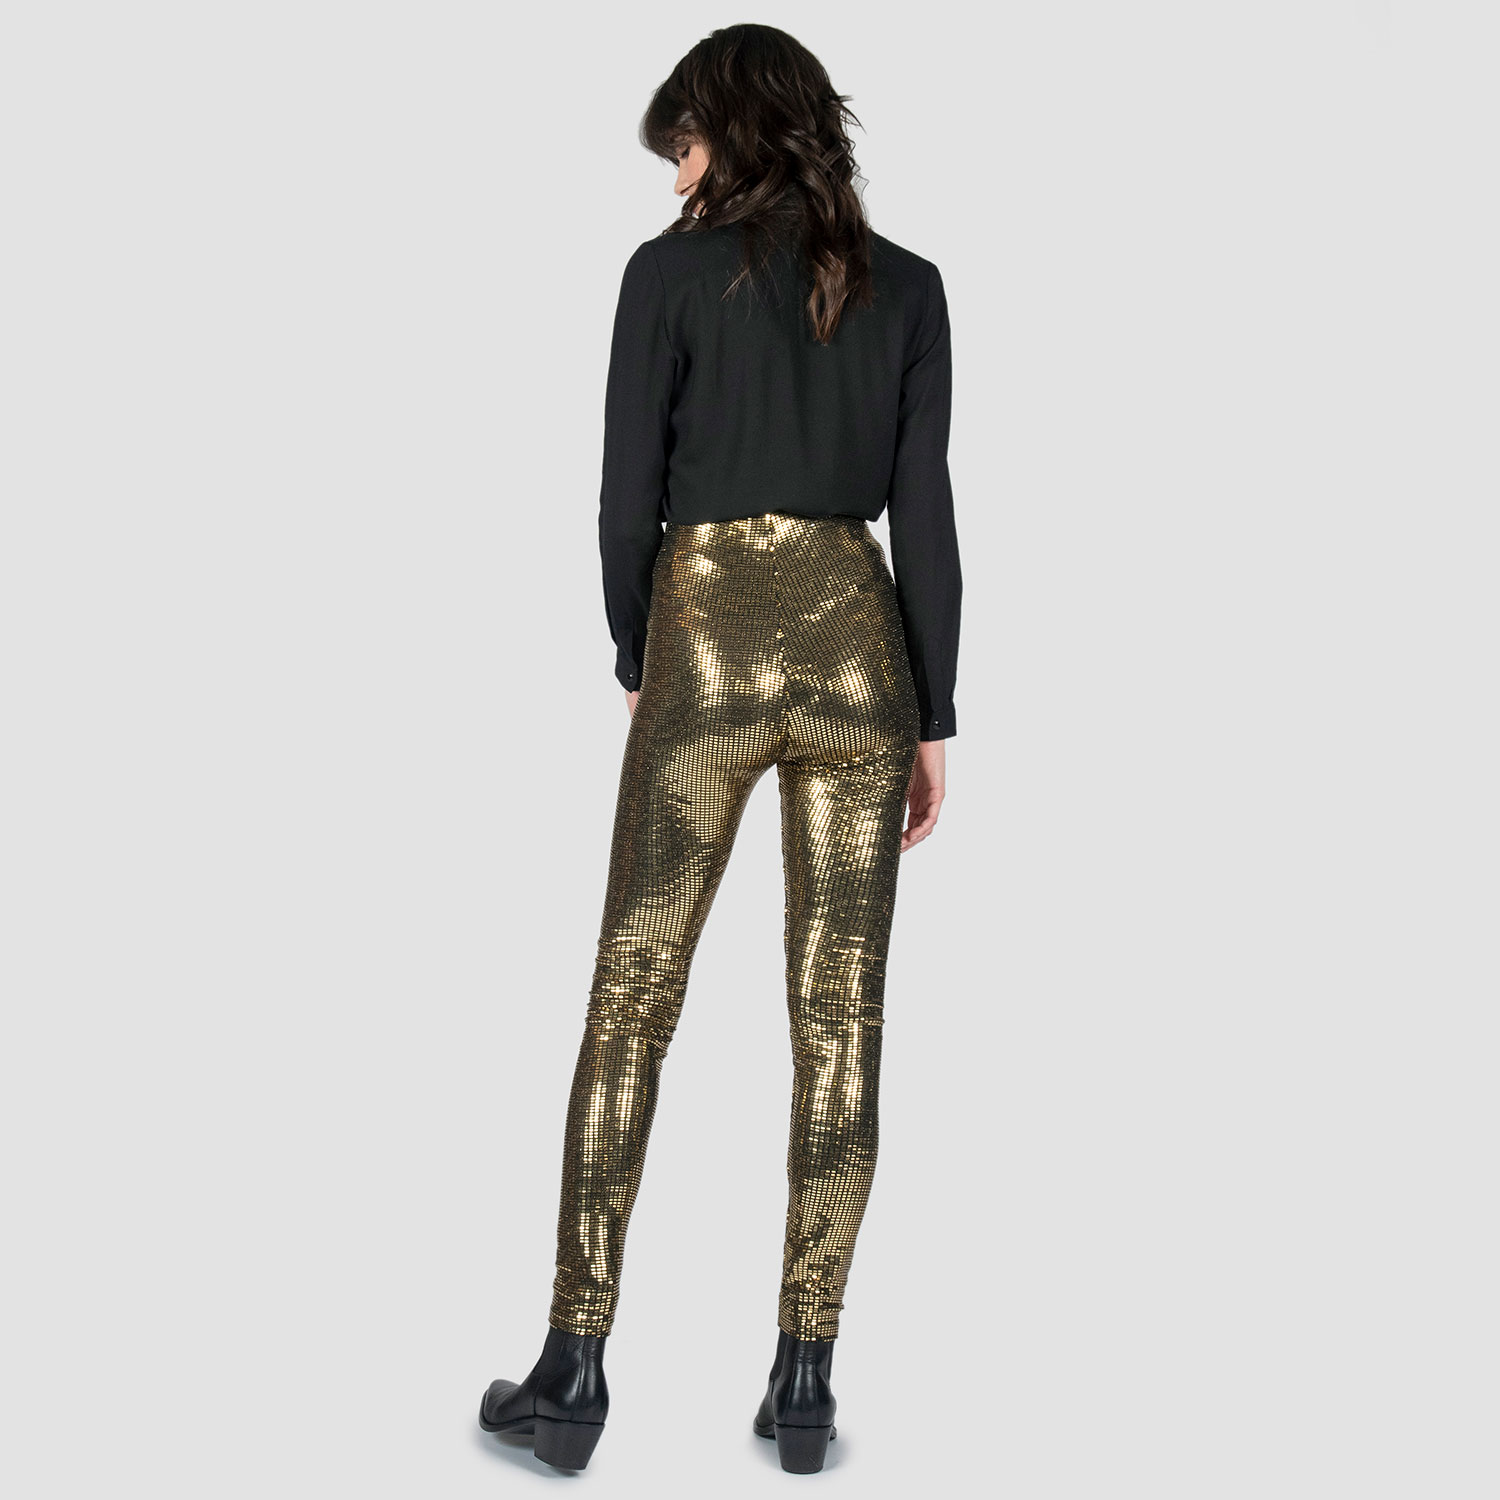 Zara Tan Gold Button High Waisted Leggings Pants XL